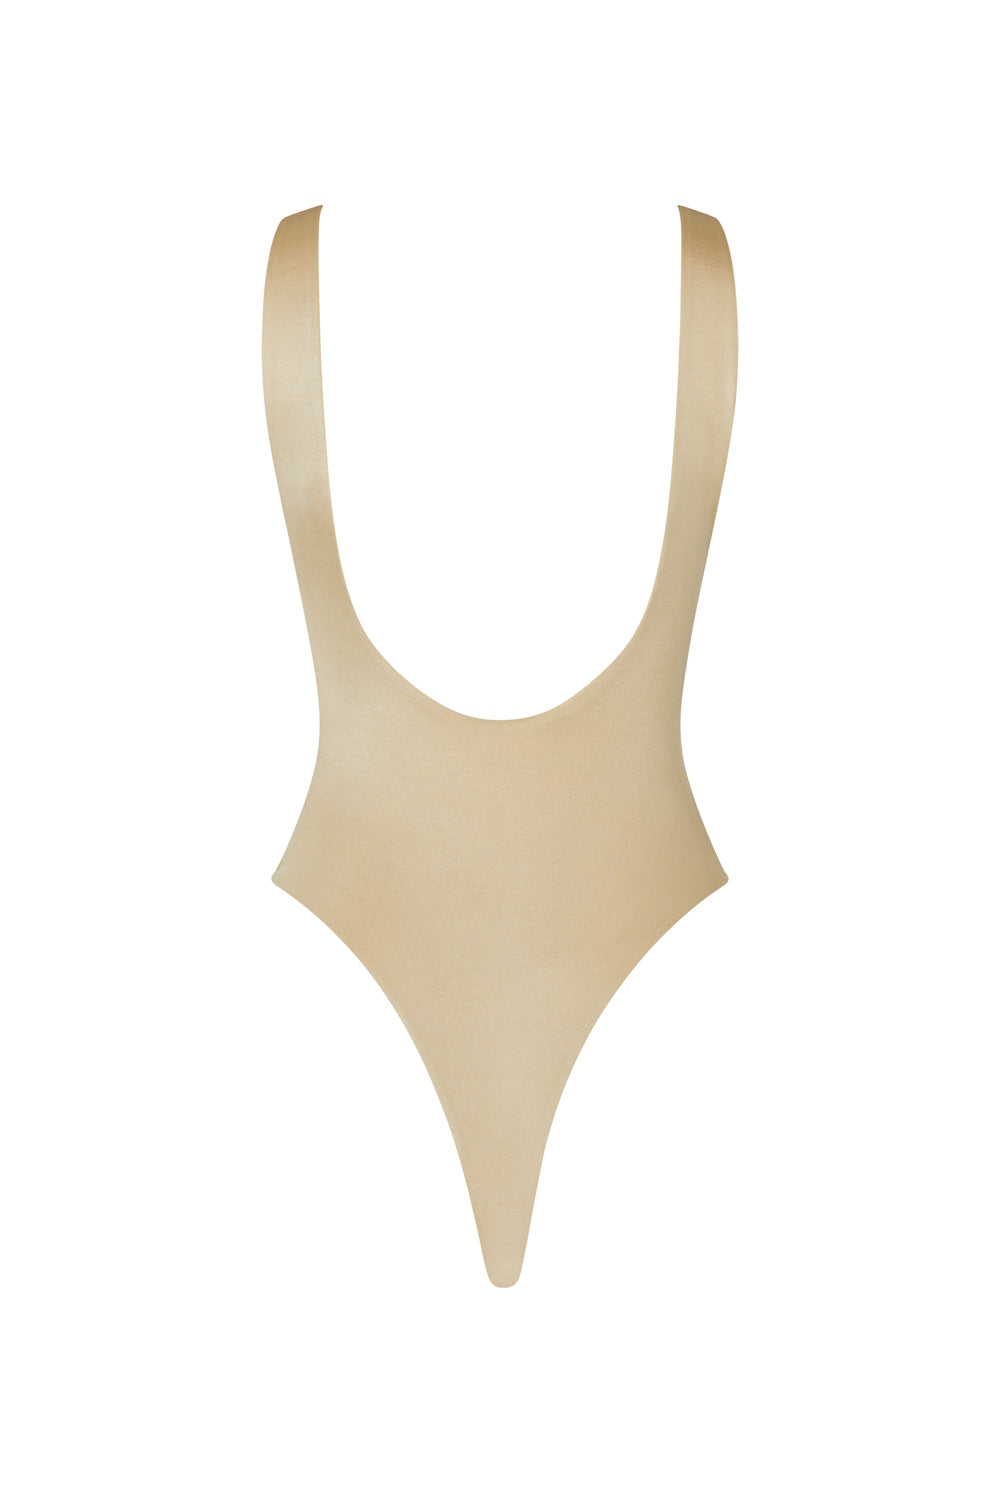 flook the label dune swimsuit swimwear gold product image back